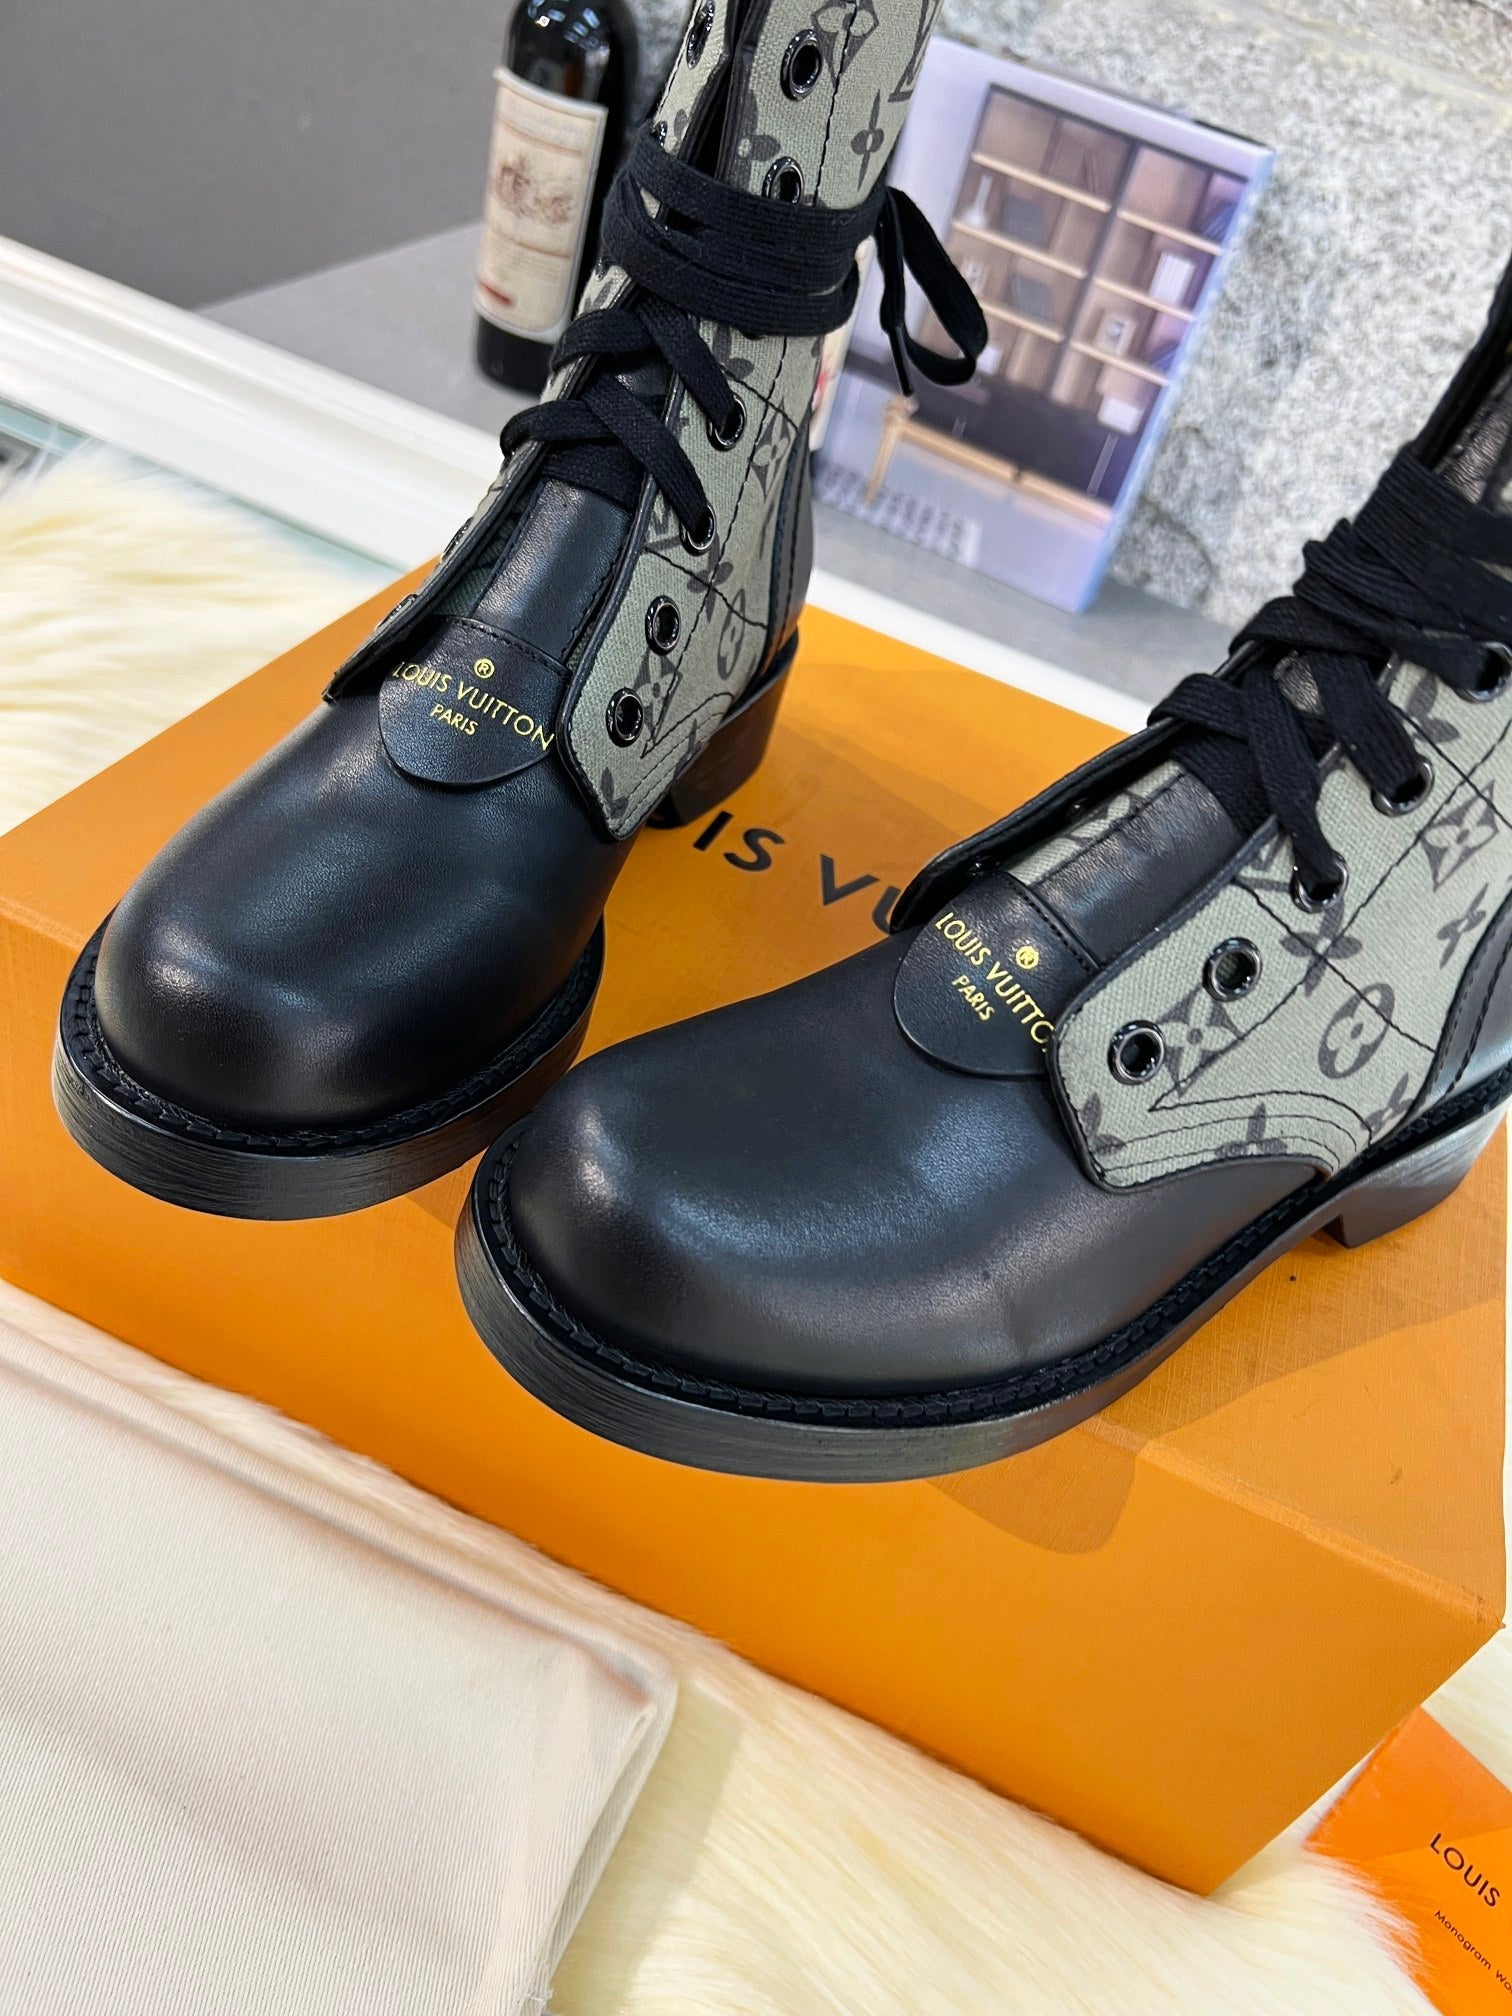 Boots > Louis Vuitton Metropolis Flat Ranger